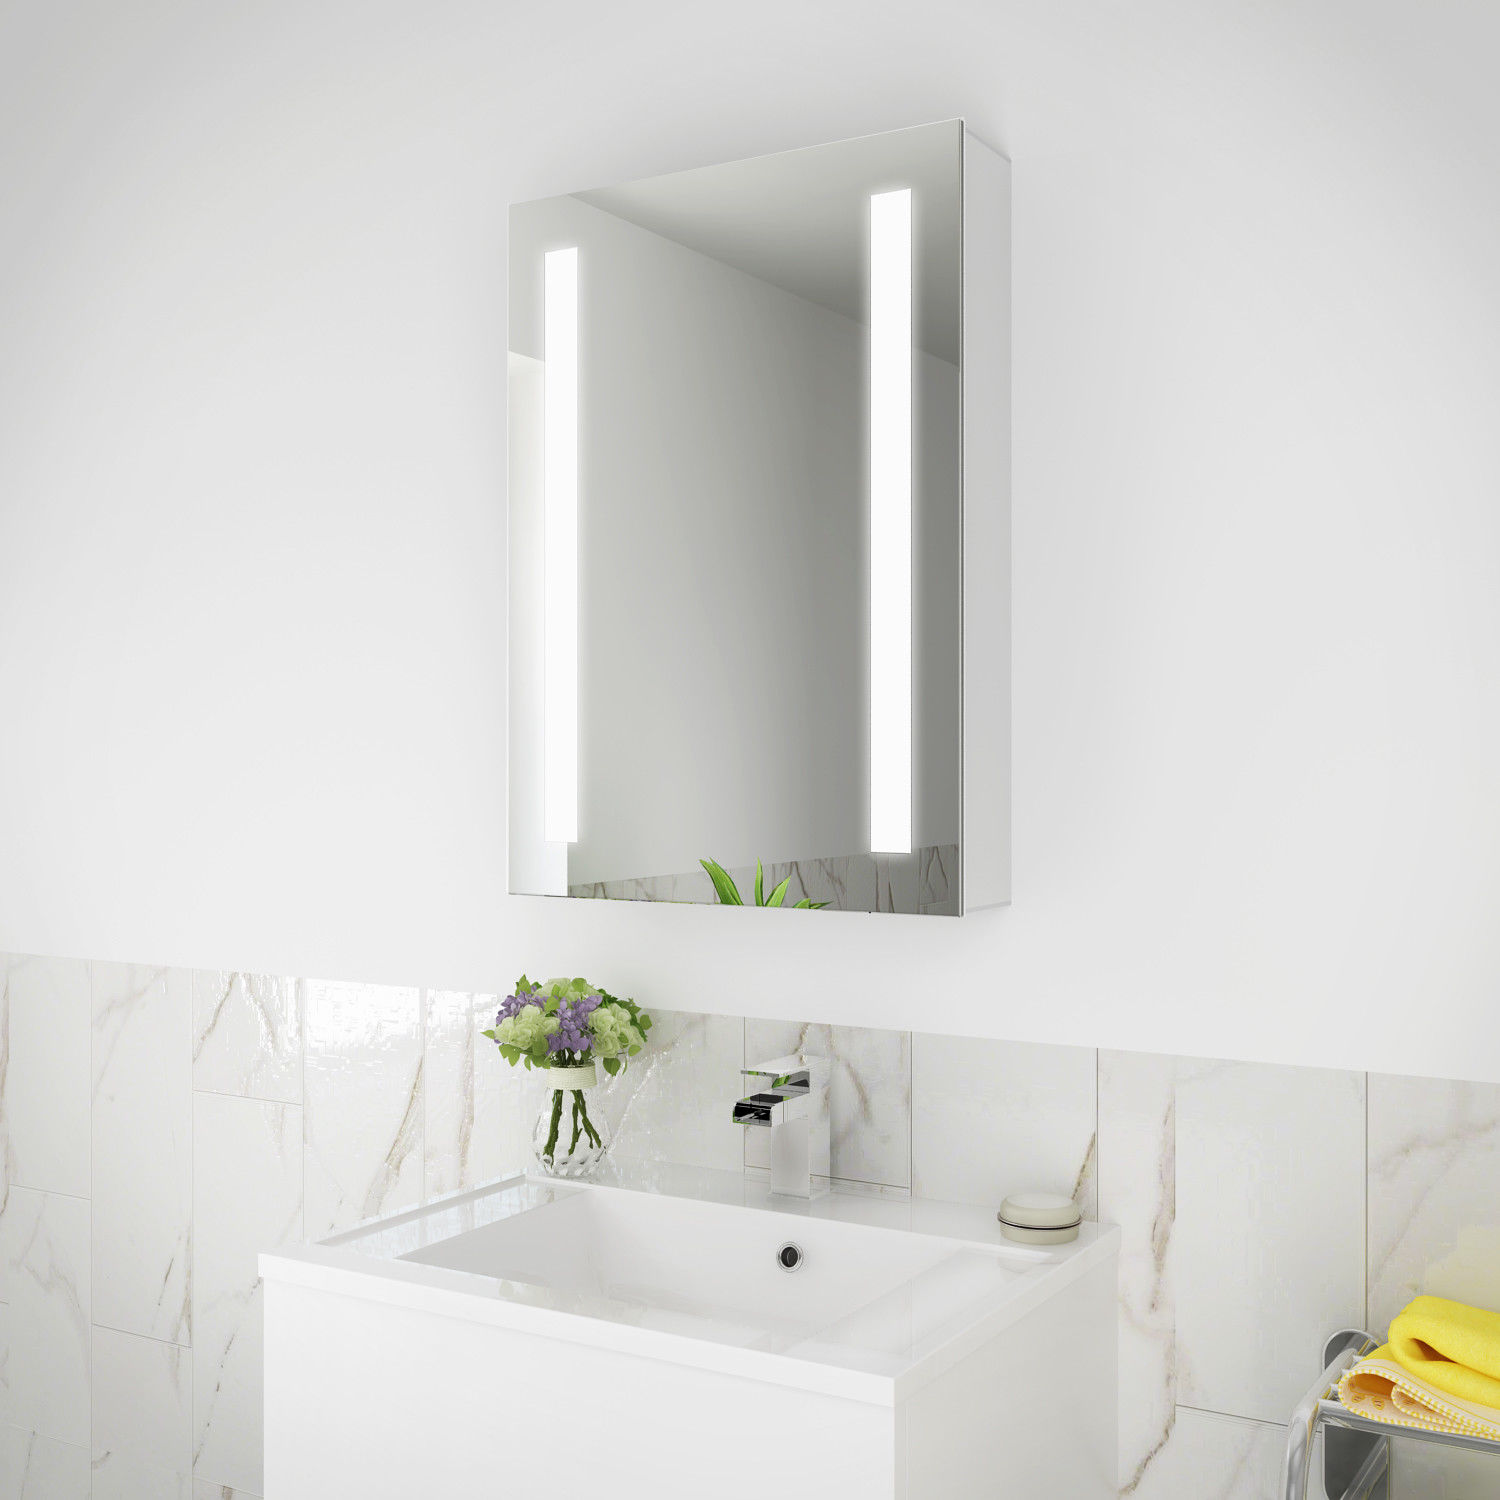 SALLY MC5070L Light up Bathroom Mirror Cabinet